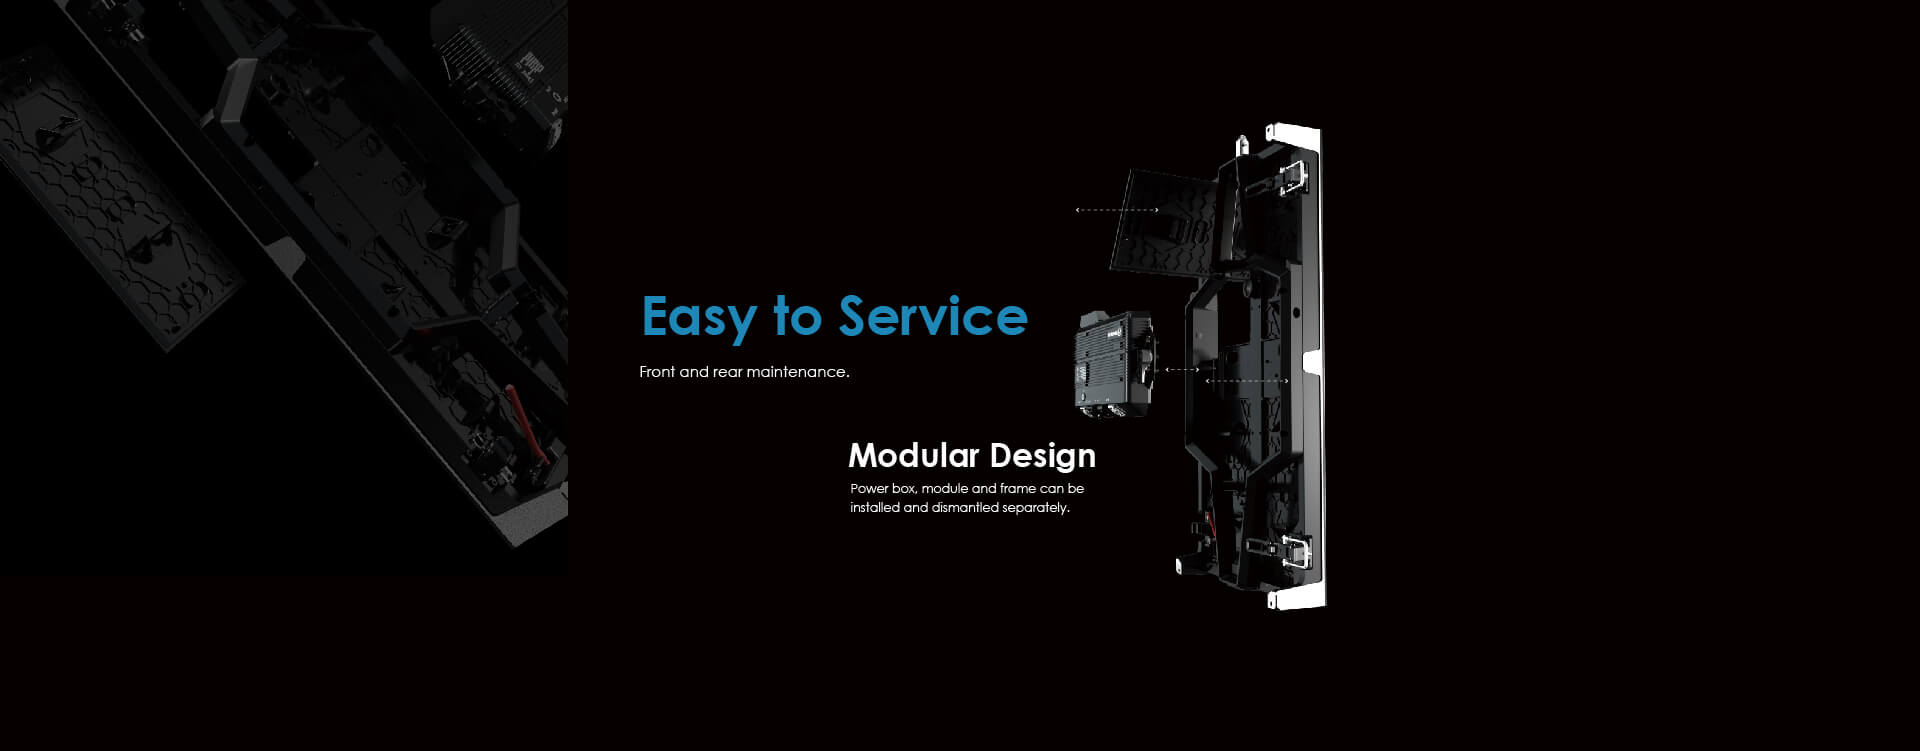 easy to service, modular design, led display